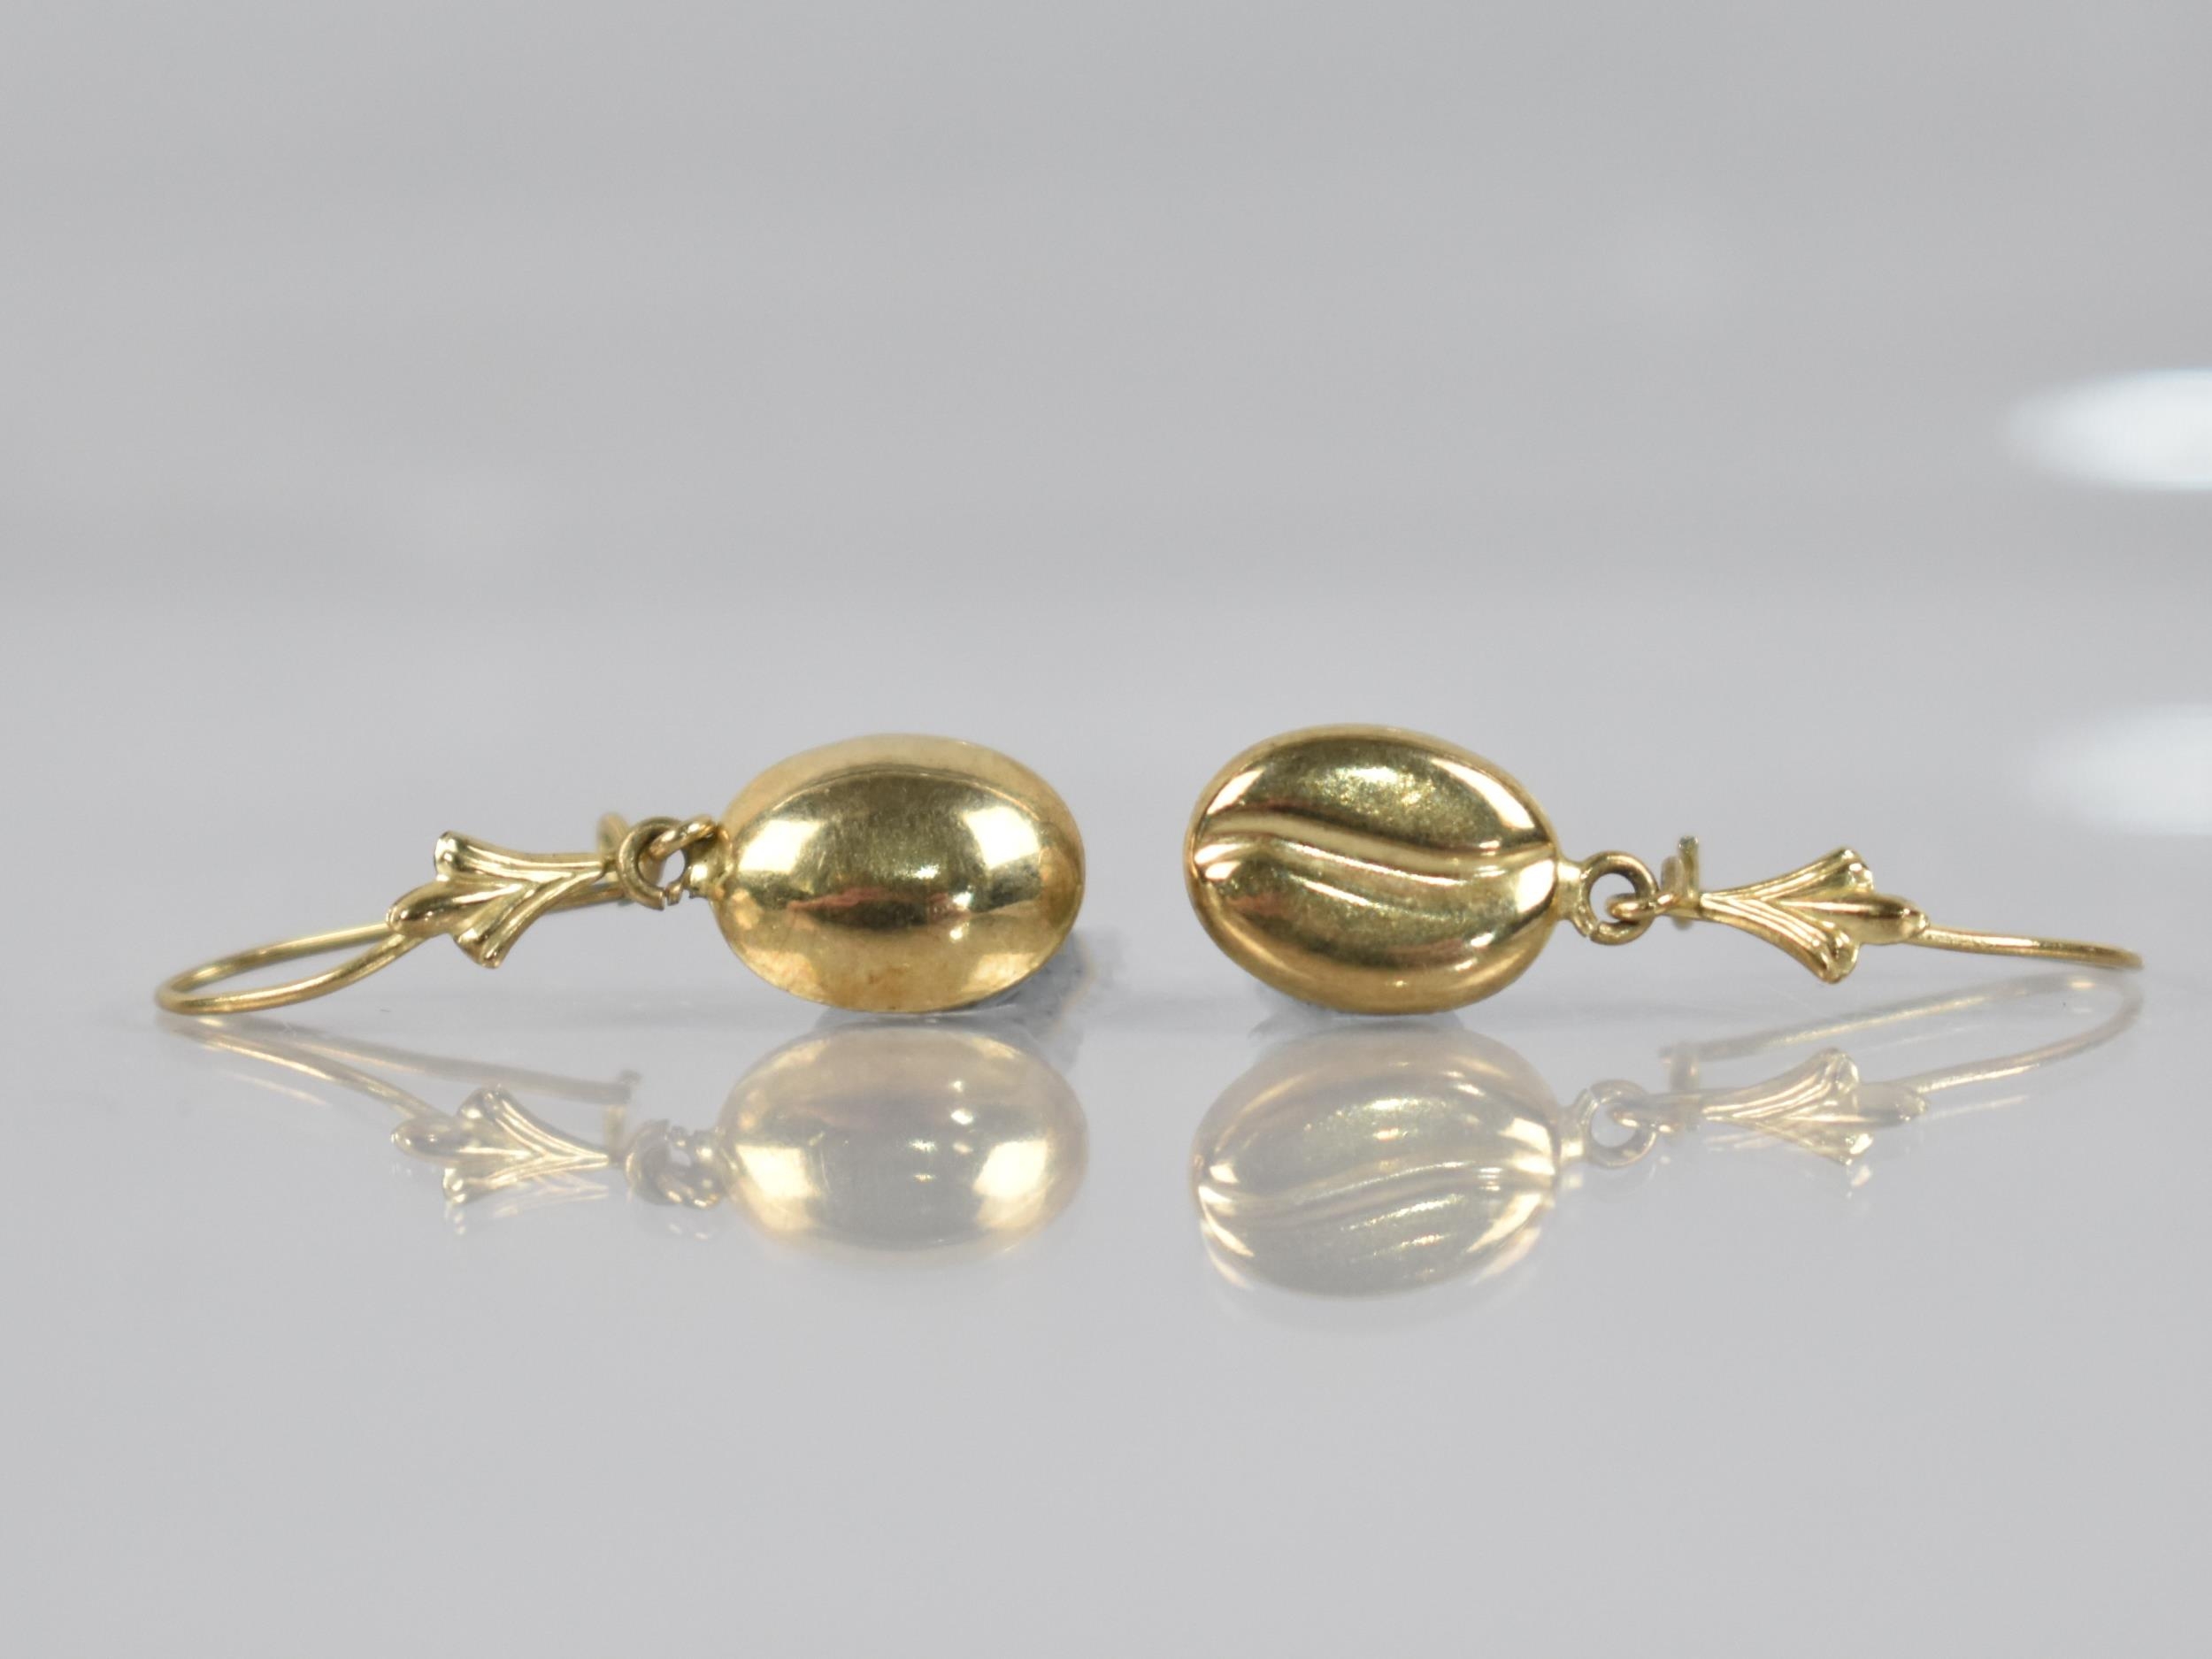 A Pair of Vintage Yellow Metal Coffee Bean Drop Earrings with Fish Hook Backs, 1gm - Image 2 of 2